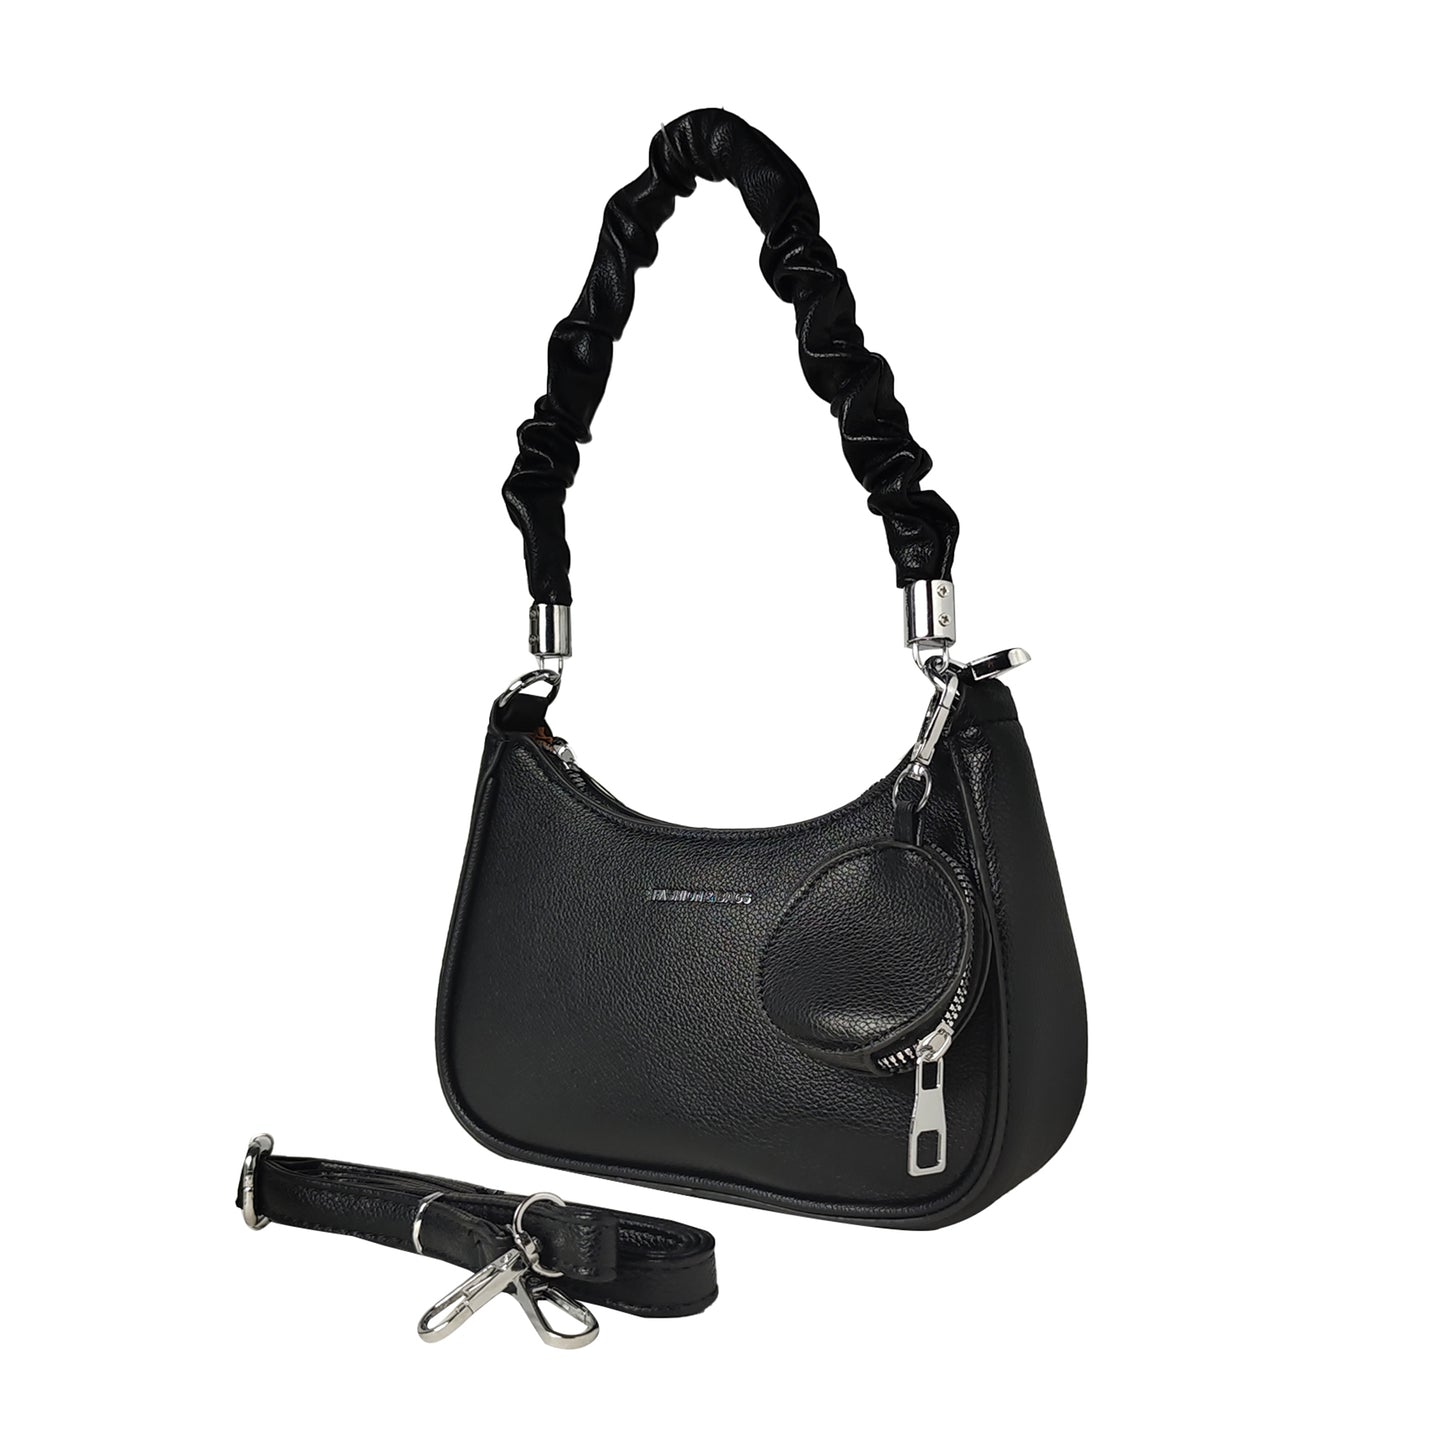 Justbags Elegant Stylish Mini Shoulder Handbag for Women with Zipper- Black